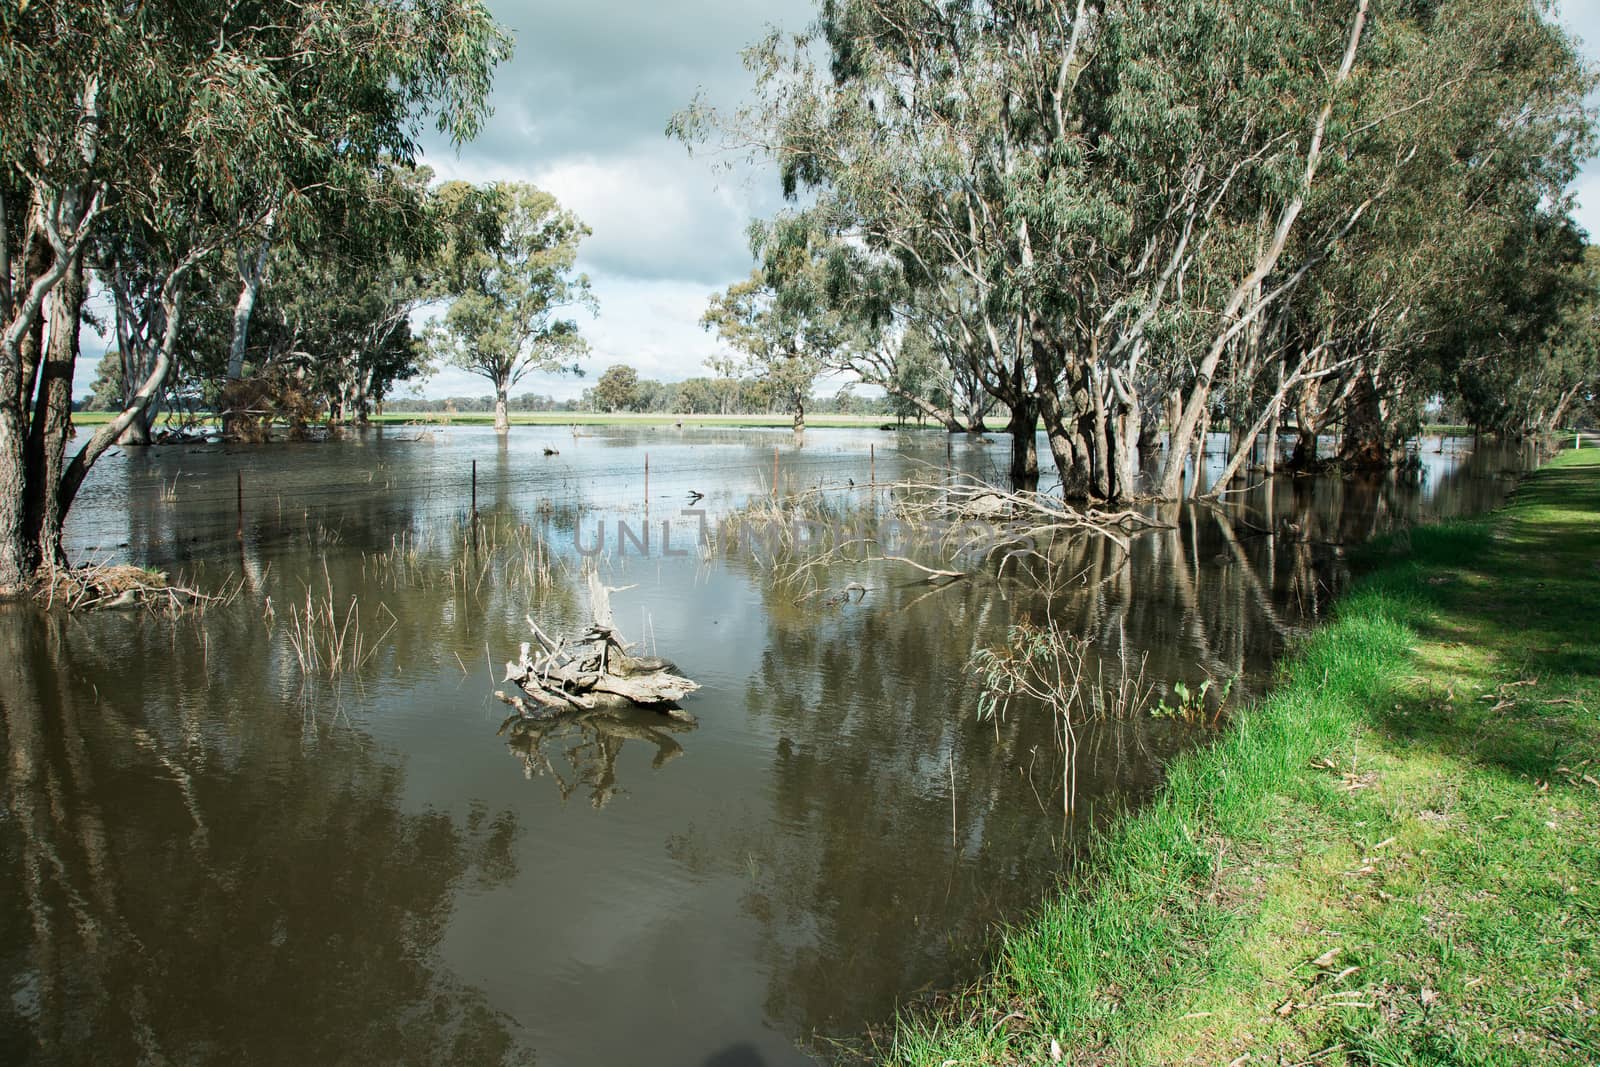 Central Victorian Floods by davidhewison